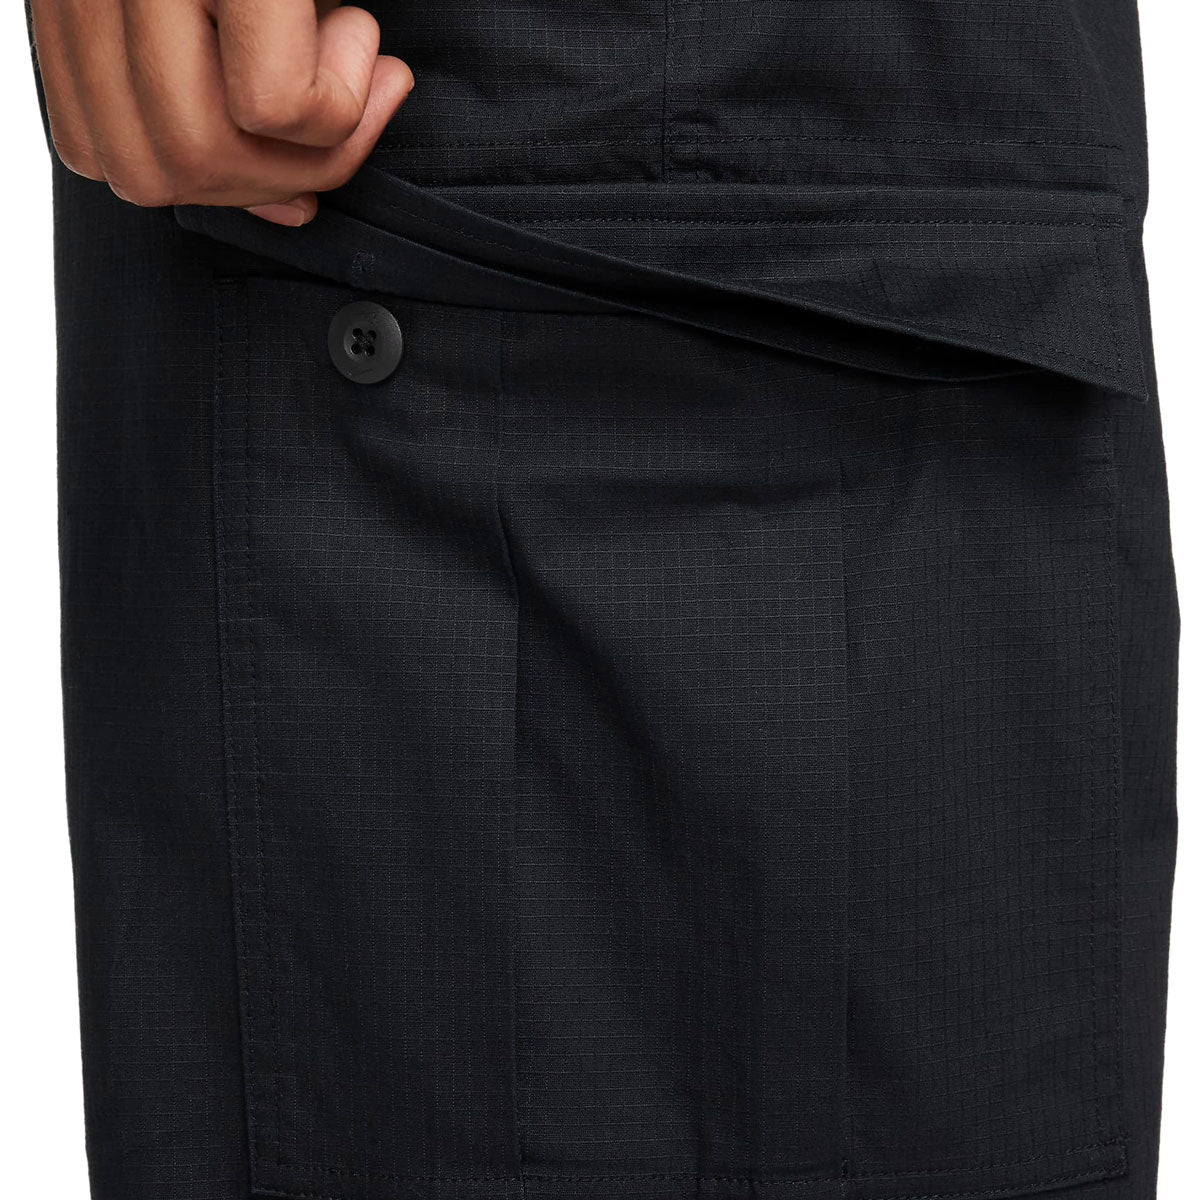 Nike SB Kearny Cargo Pants - Black image 3